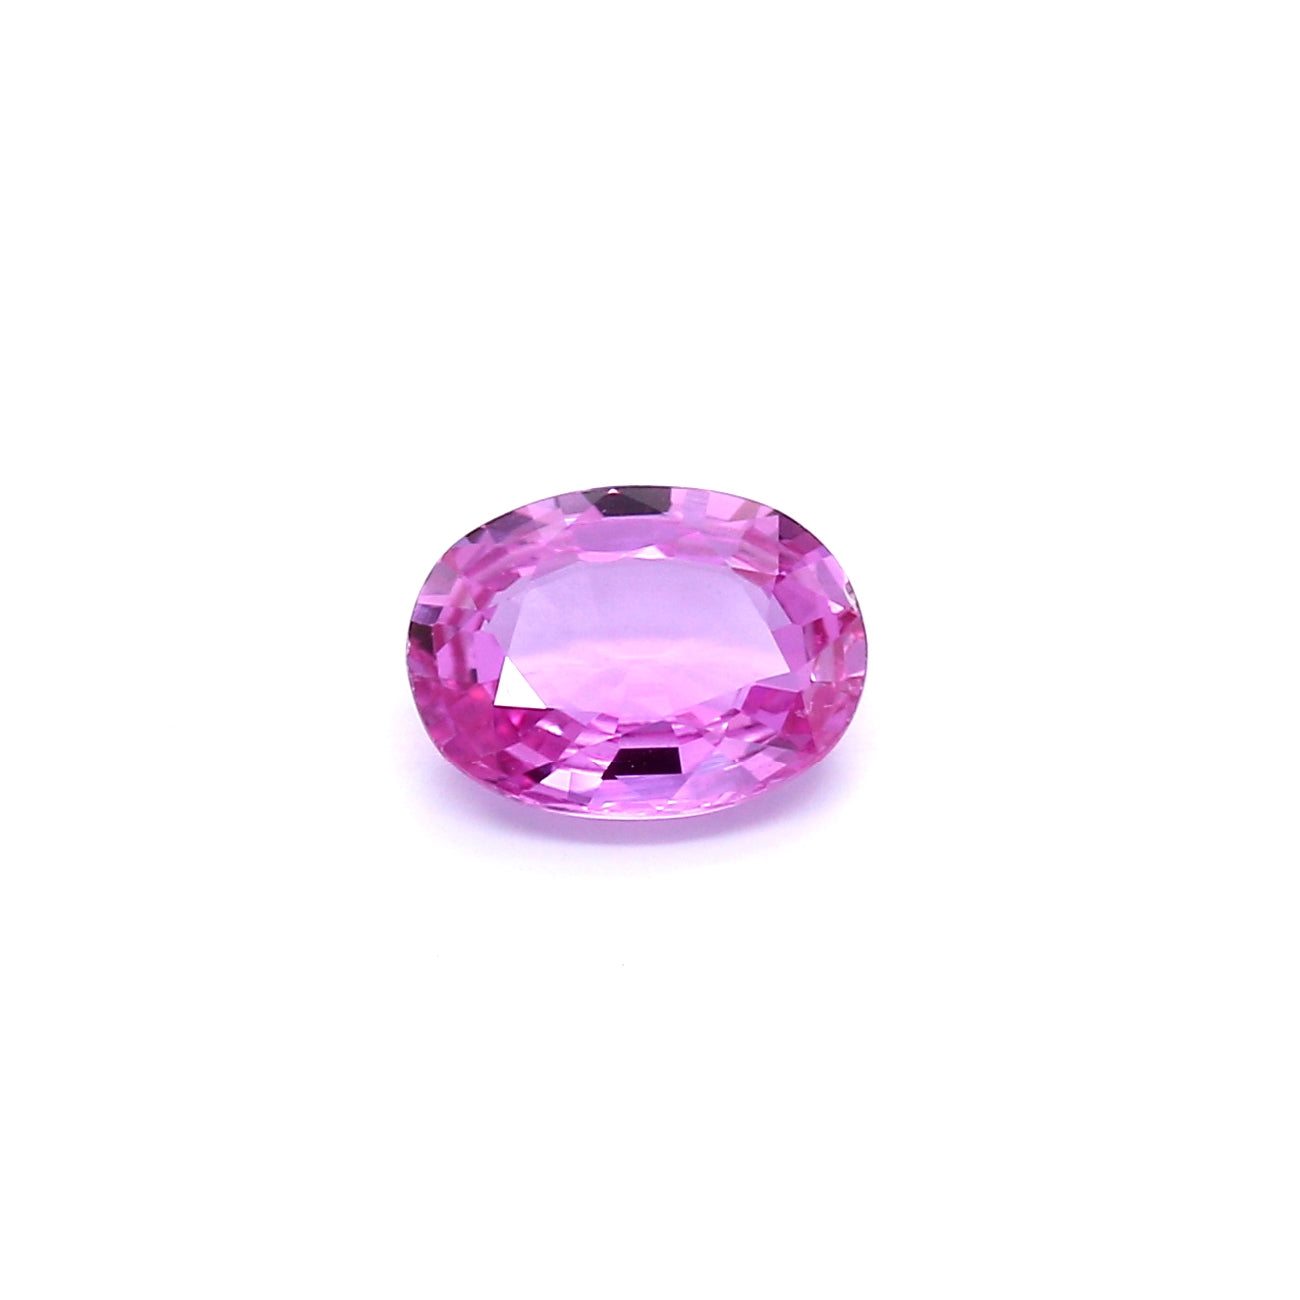 1.38ct Pink, Oval Sapphire, Heated, Madagascar - 8.01 x 6.09 x 2.98mm